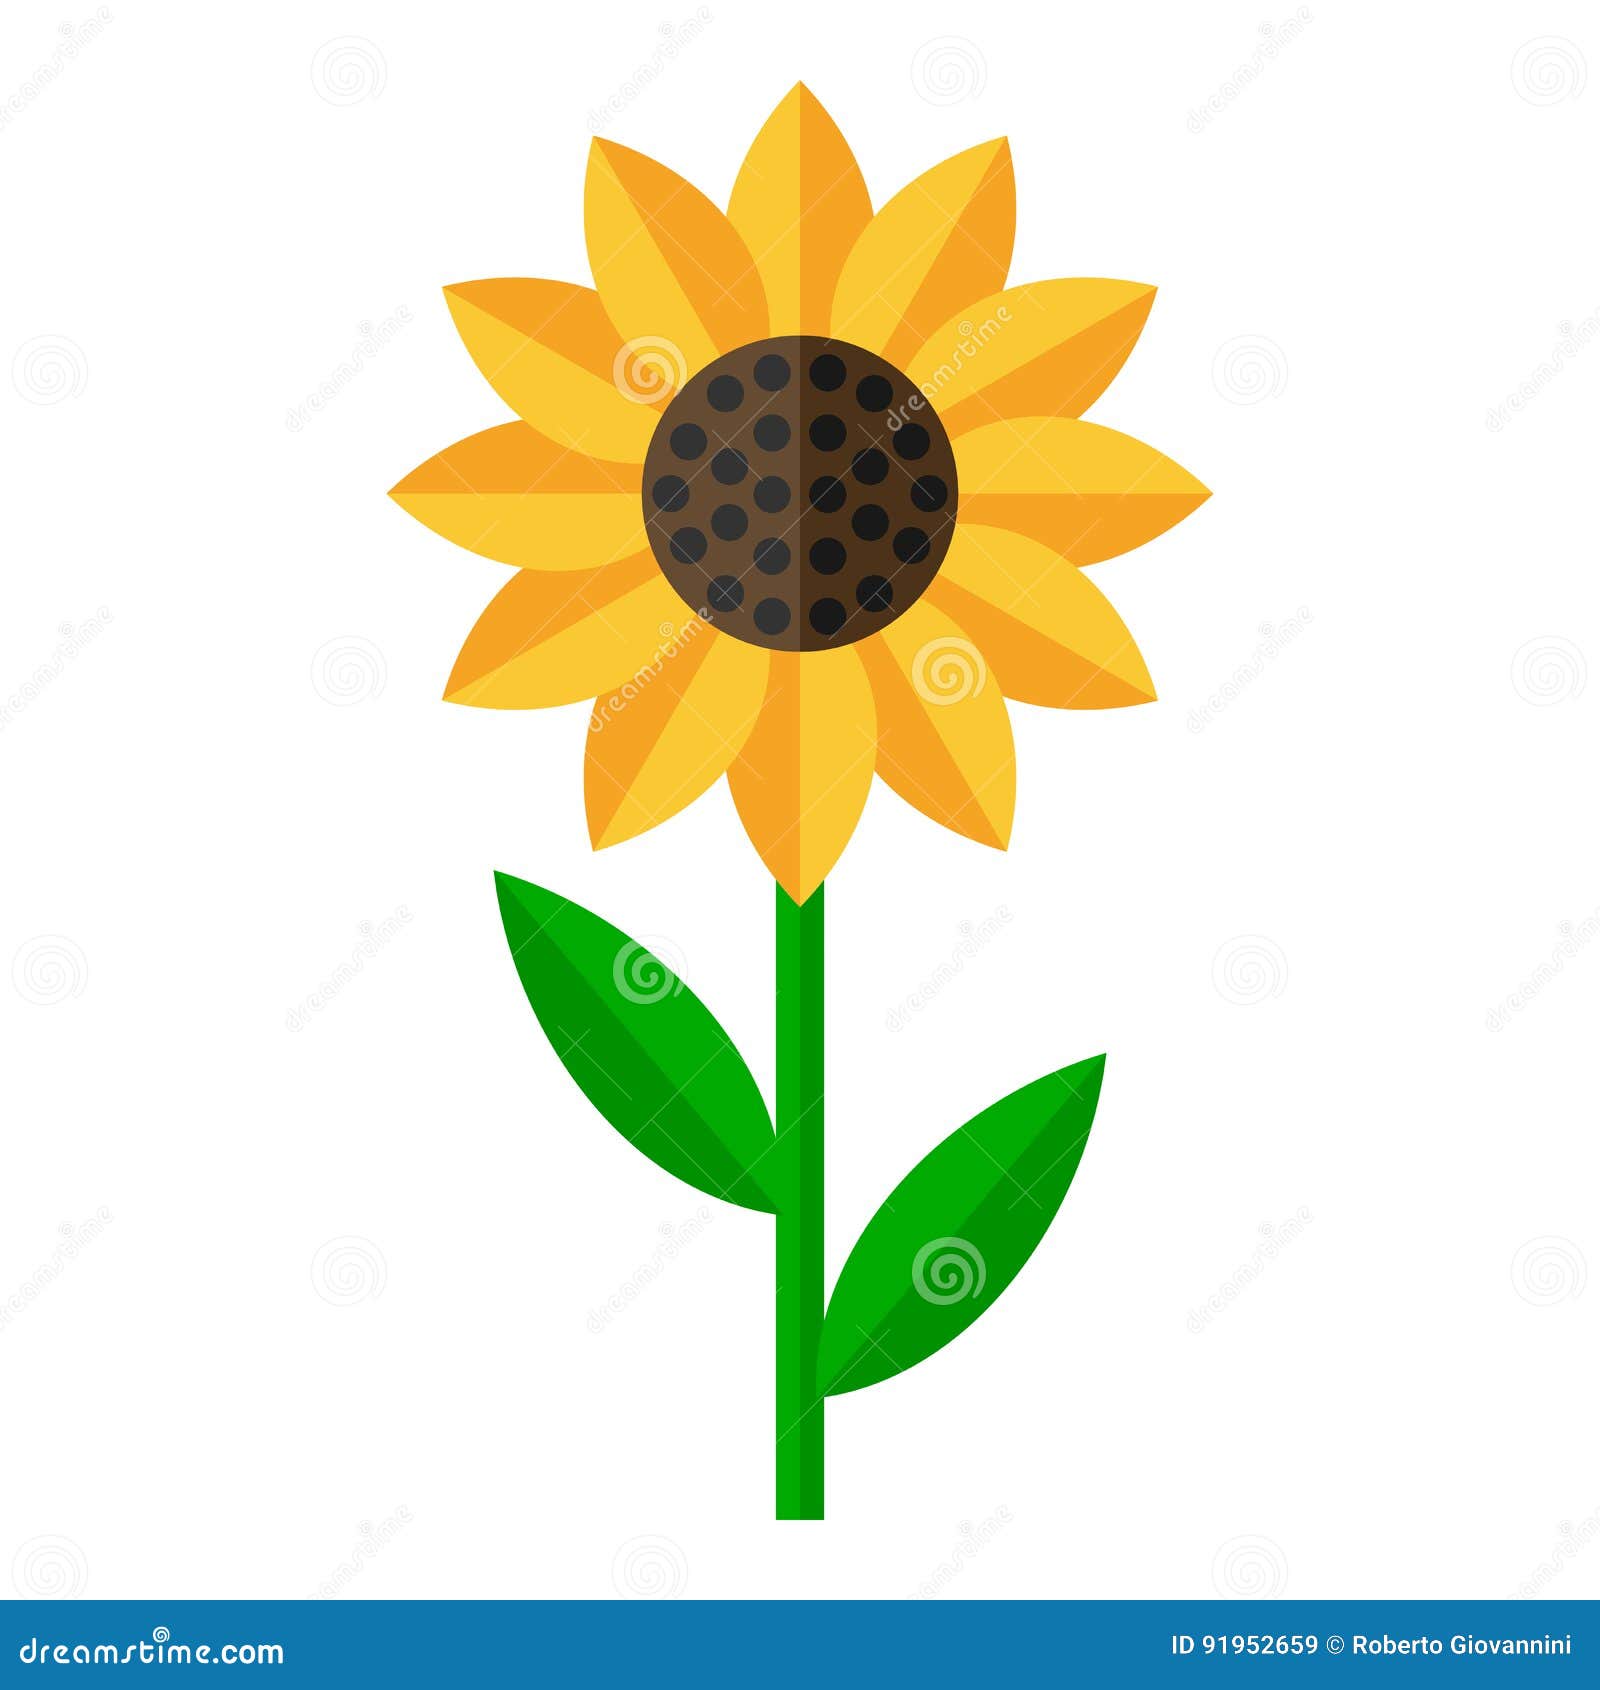 sunflower flat icon  on white